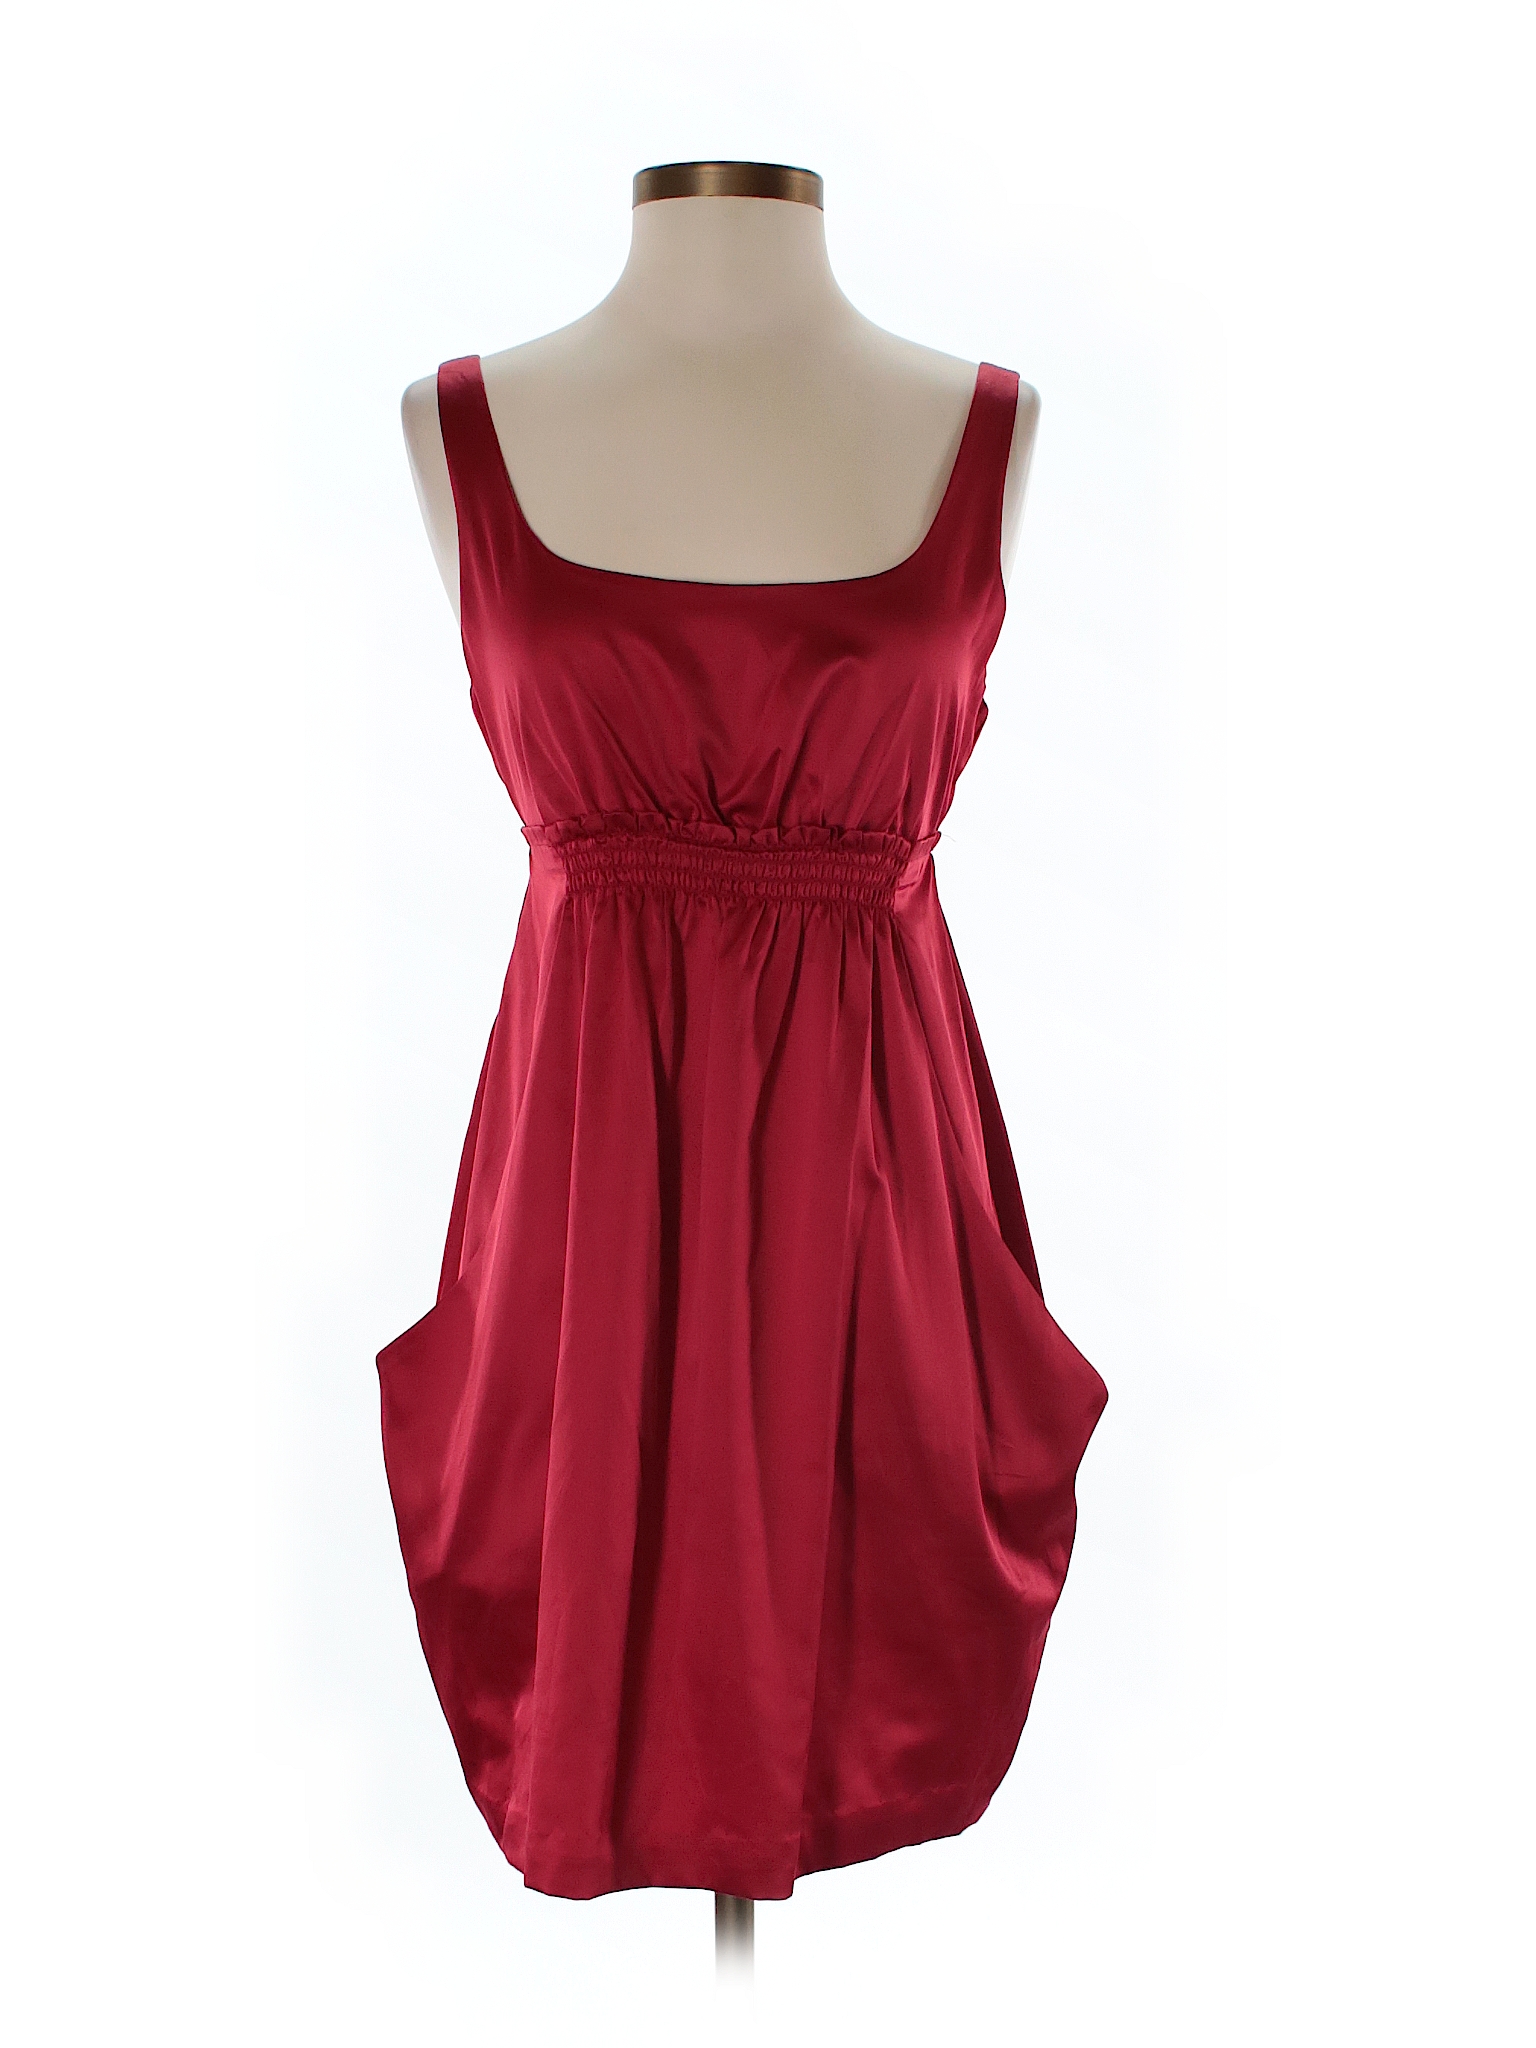 BCBGeneration Solid Red Cocktail Dress Size S - 84% off | thredUP